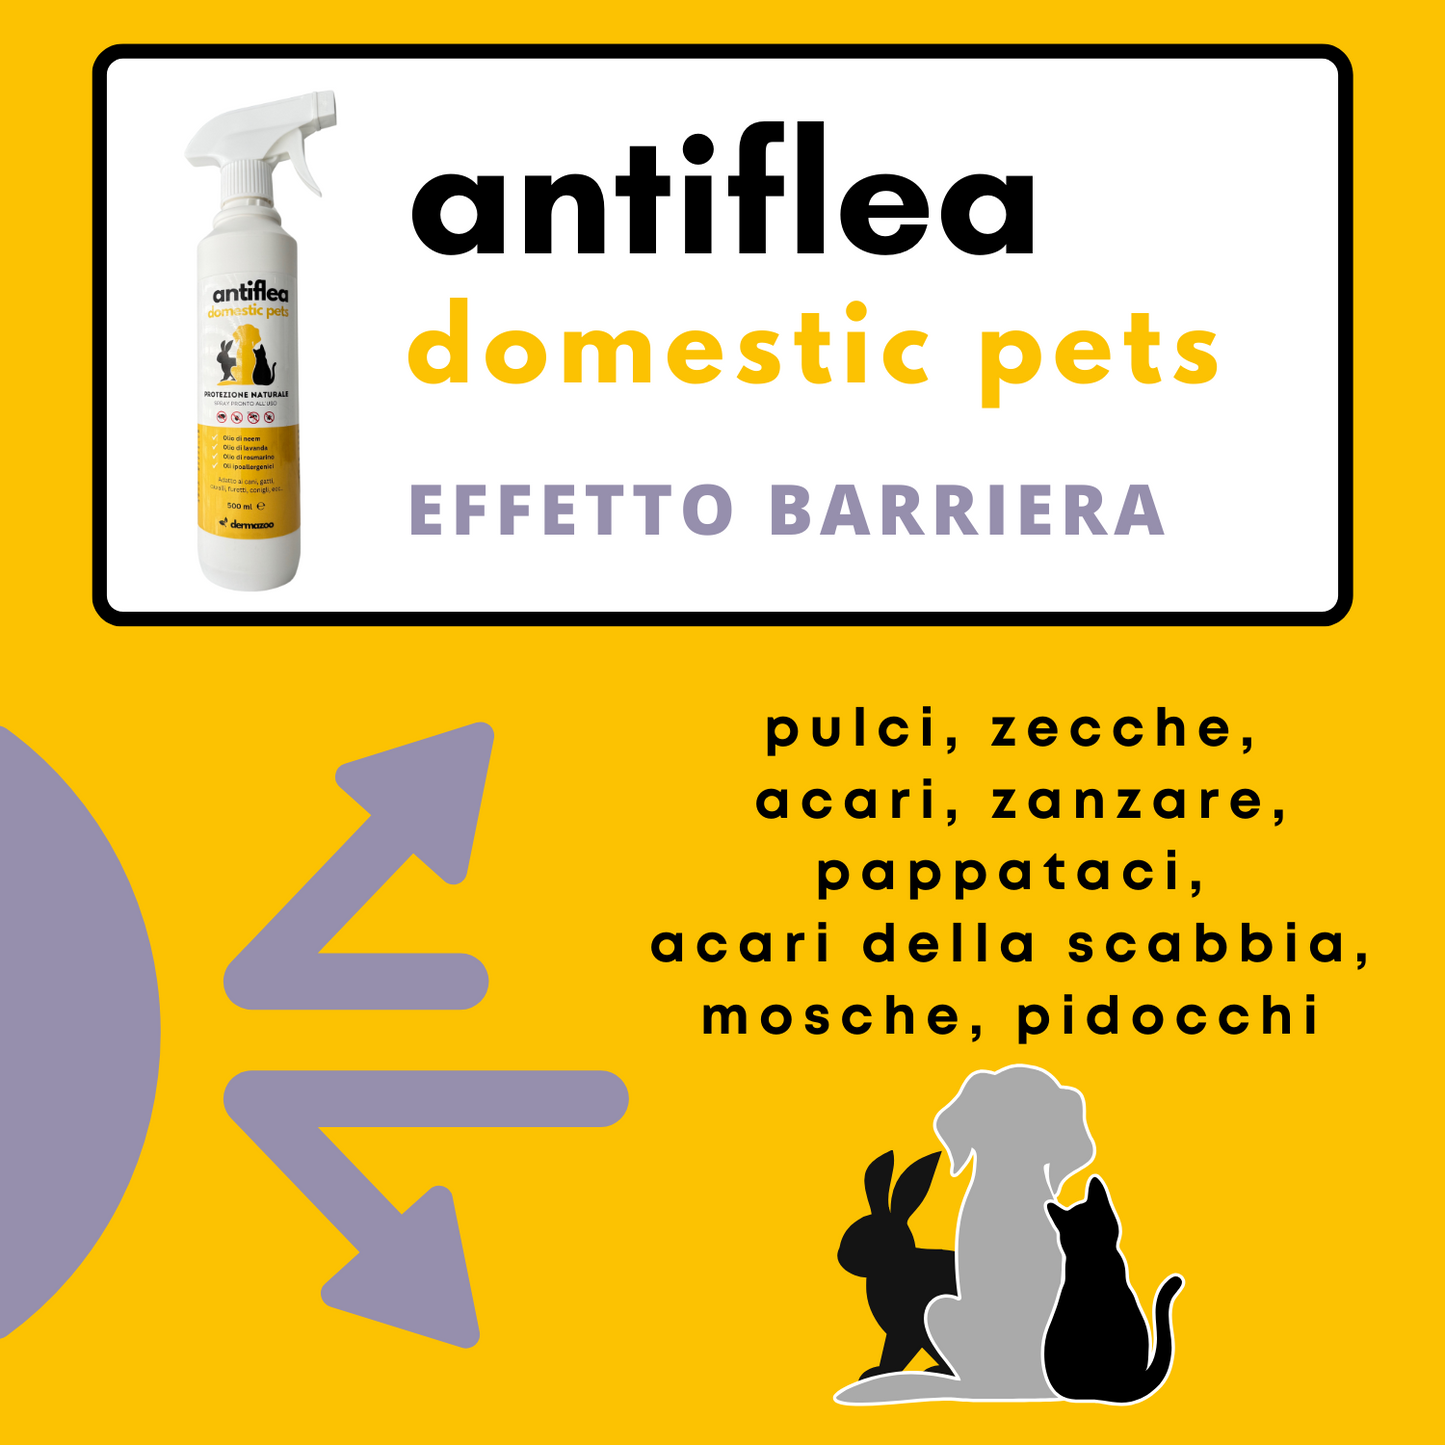 dermazoo - Antiflea domestic pets Repellente Spray per cani